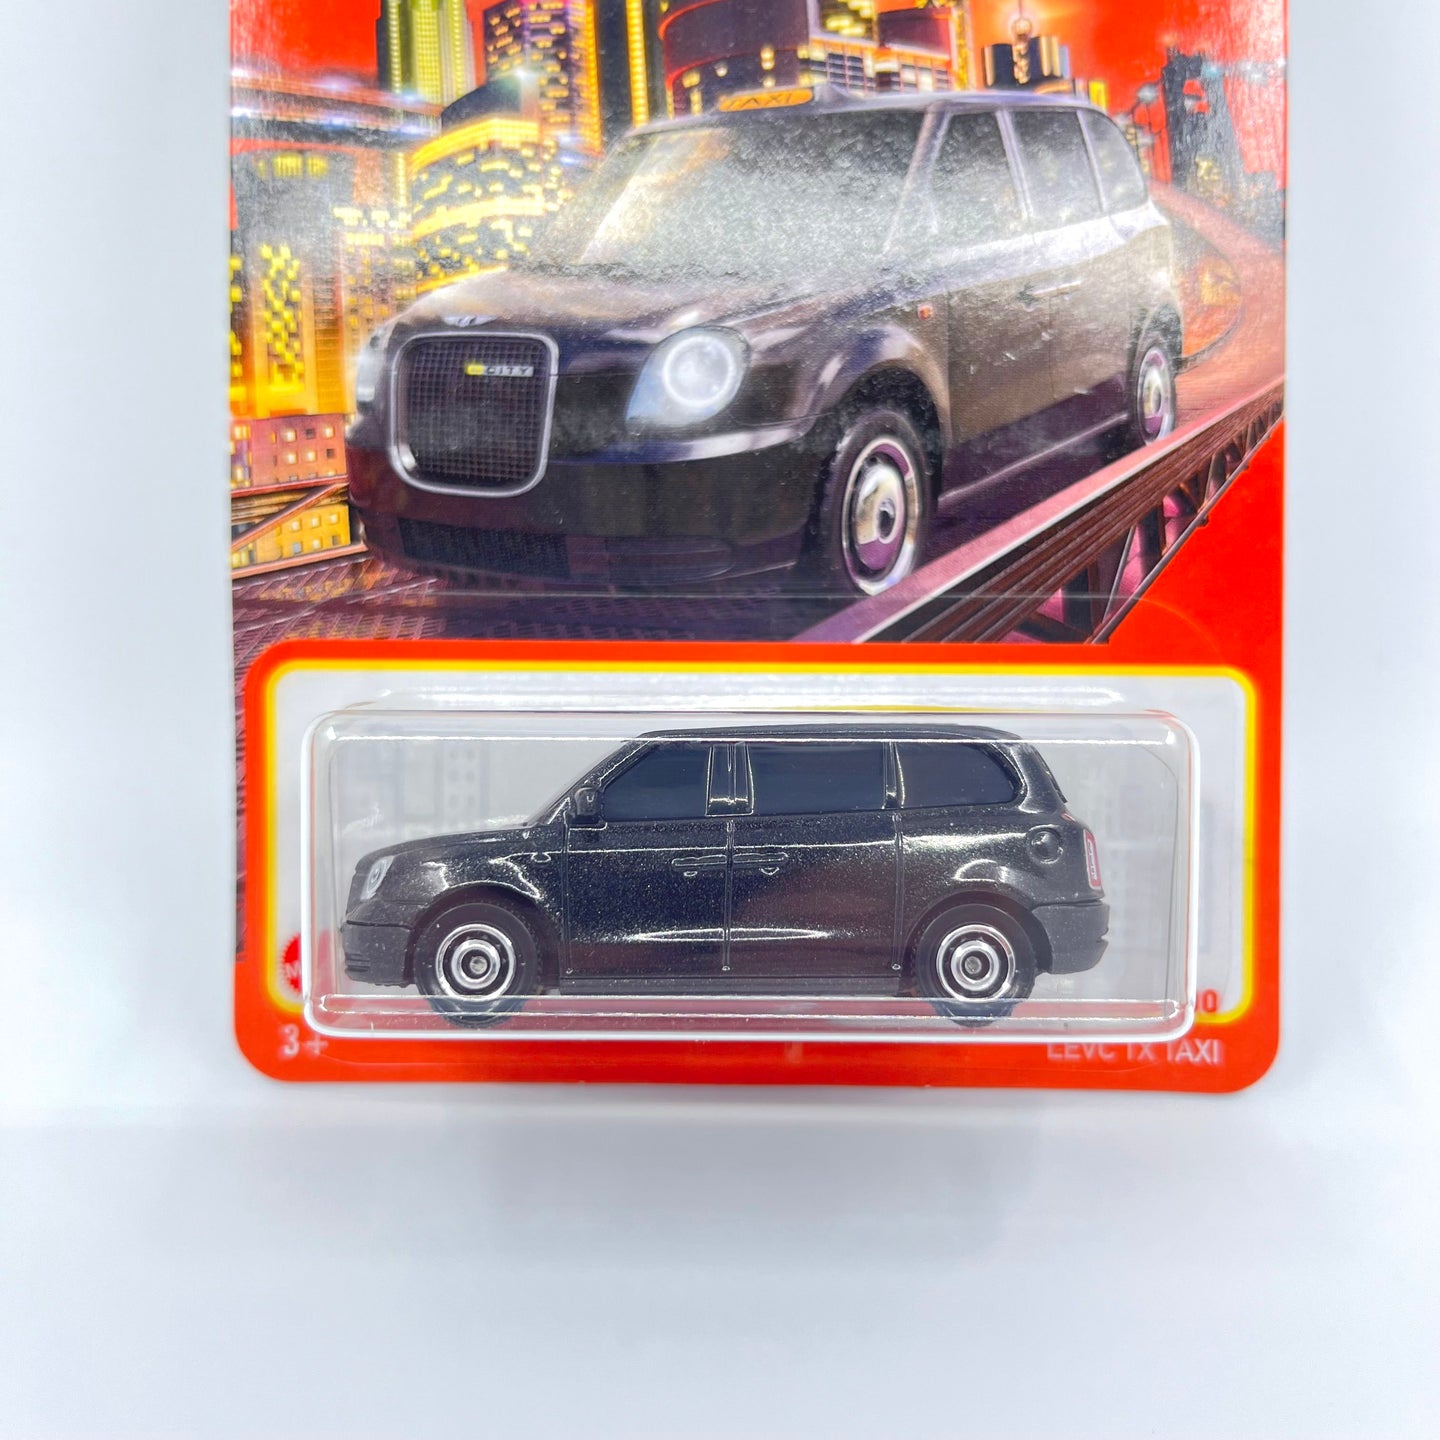 LEVC TX Taxi Rare MatchBox Alloy Diecast Car Model